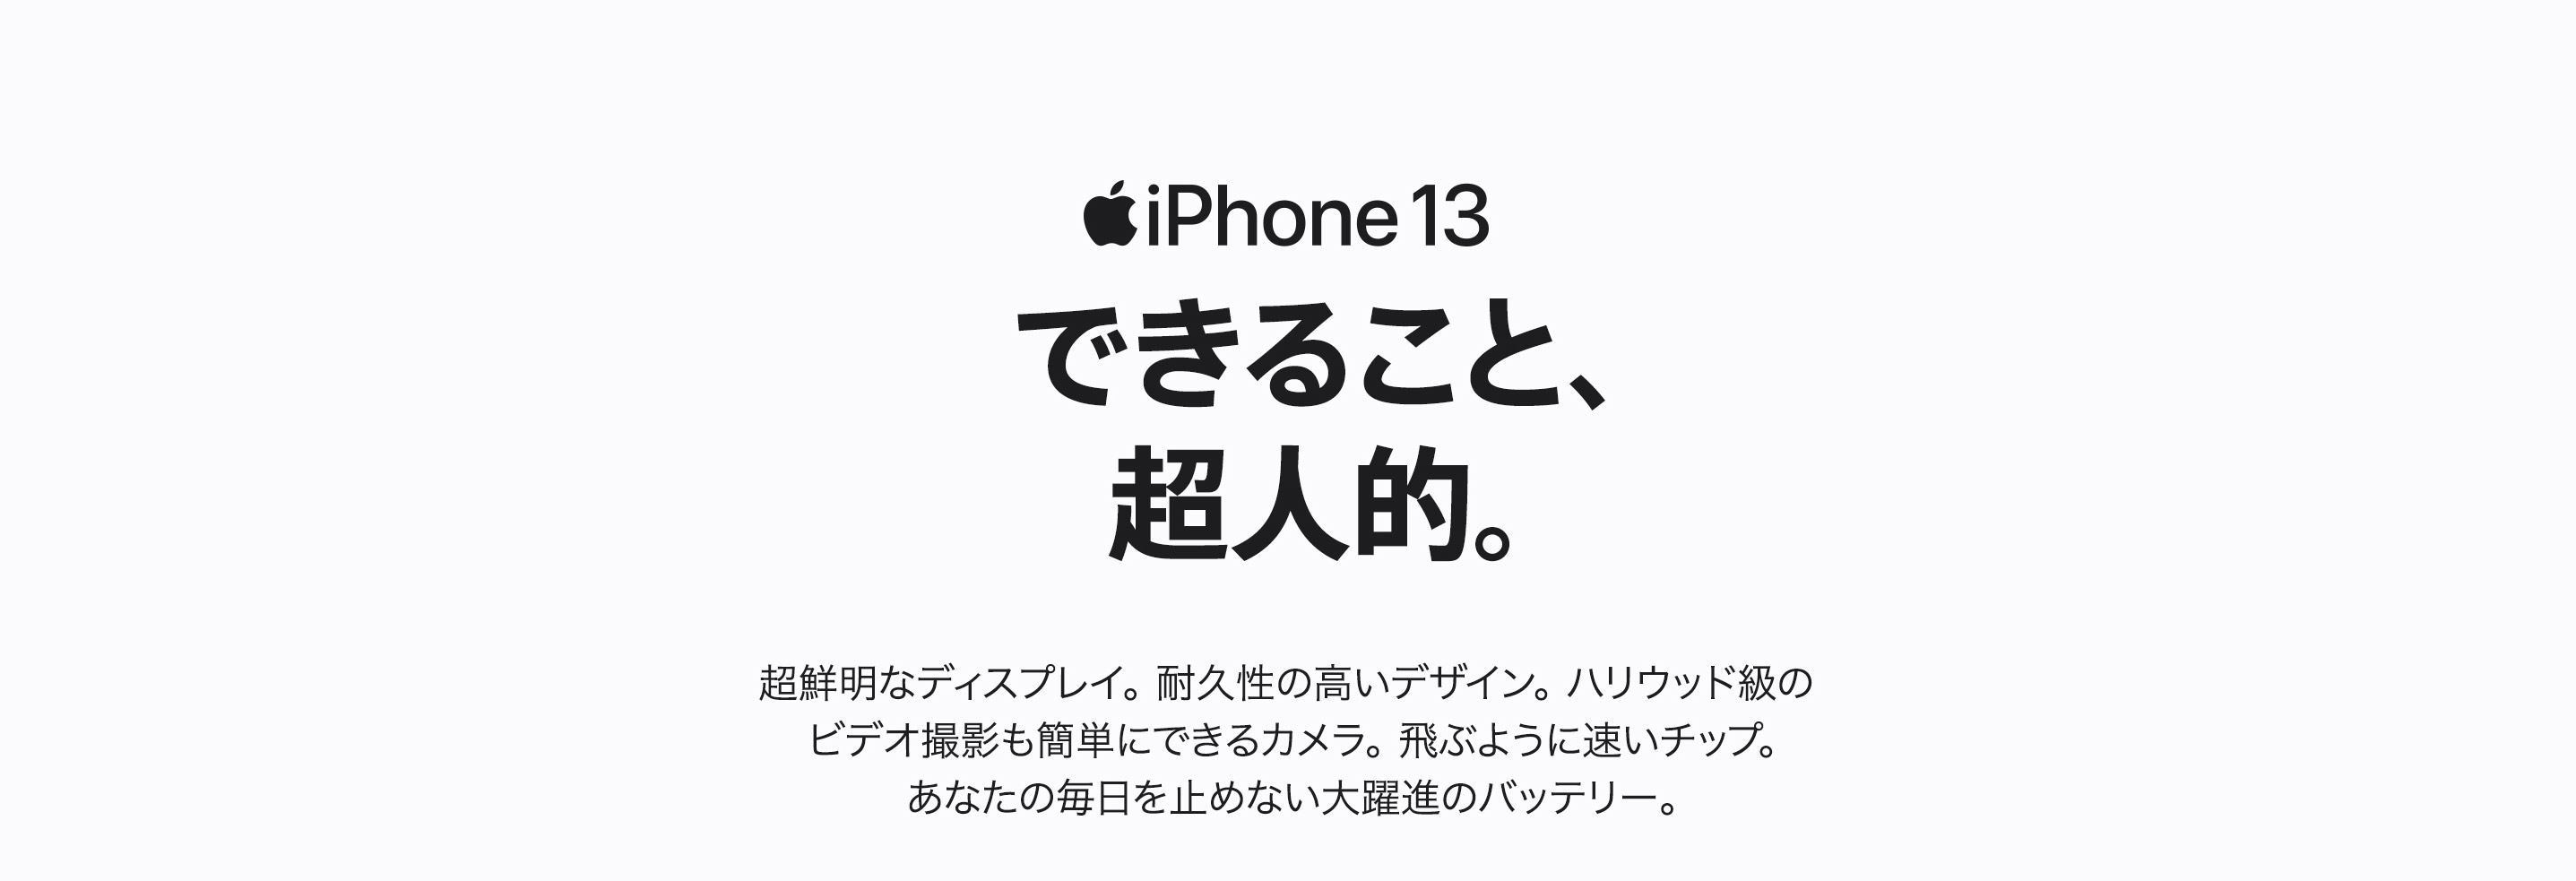 iPhone 13.iPhone 13 mini